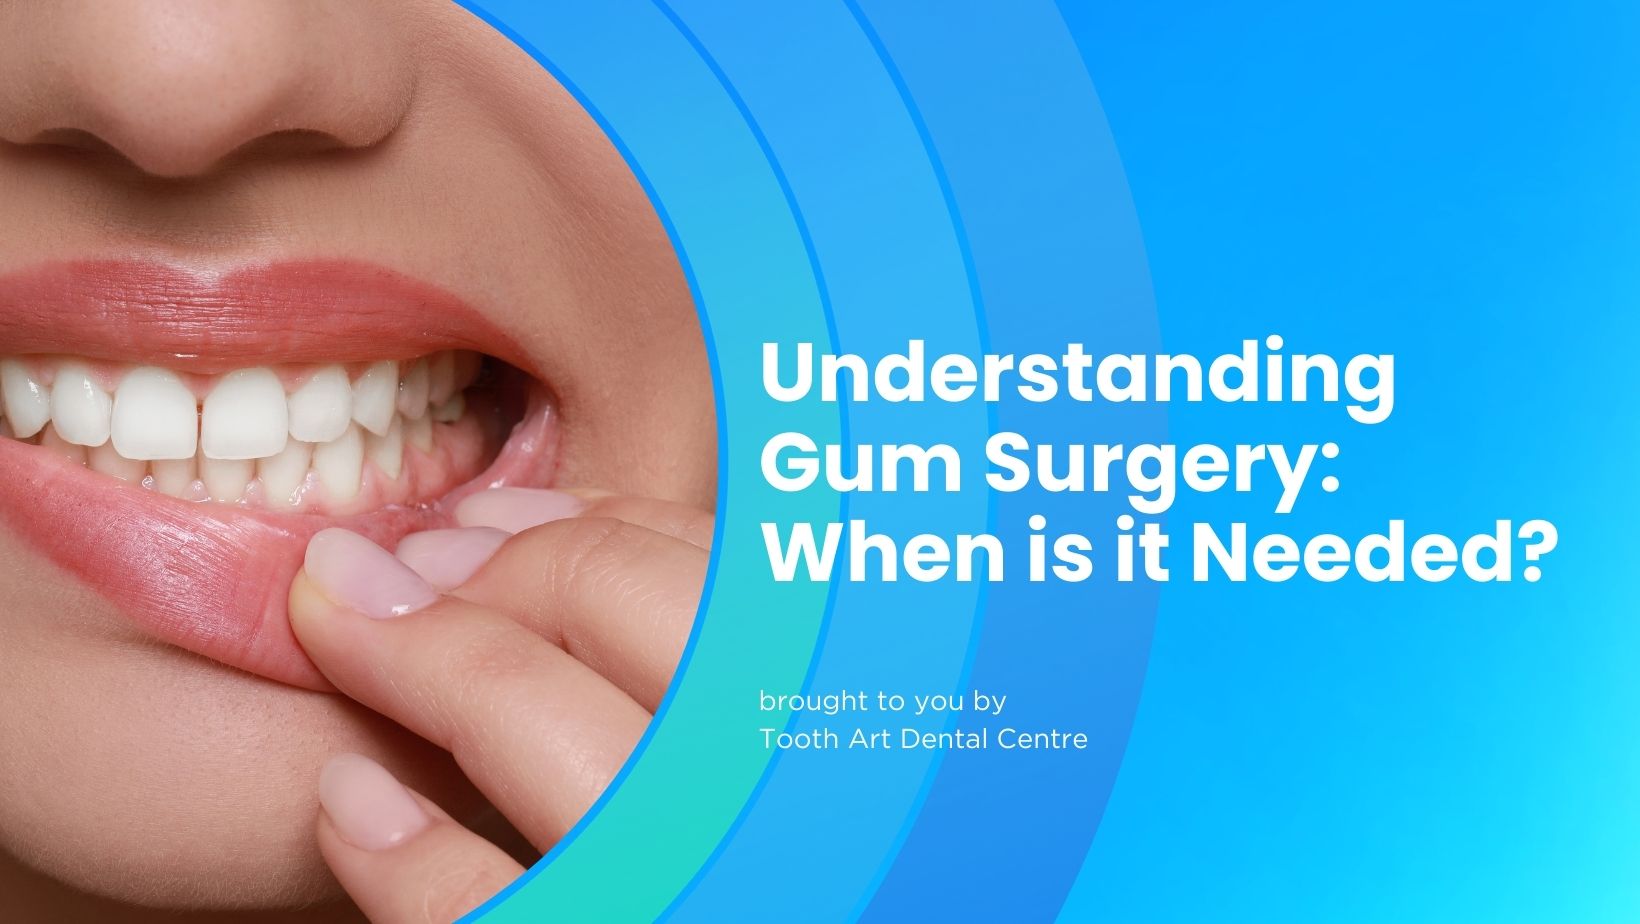 Gum surgery